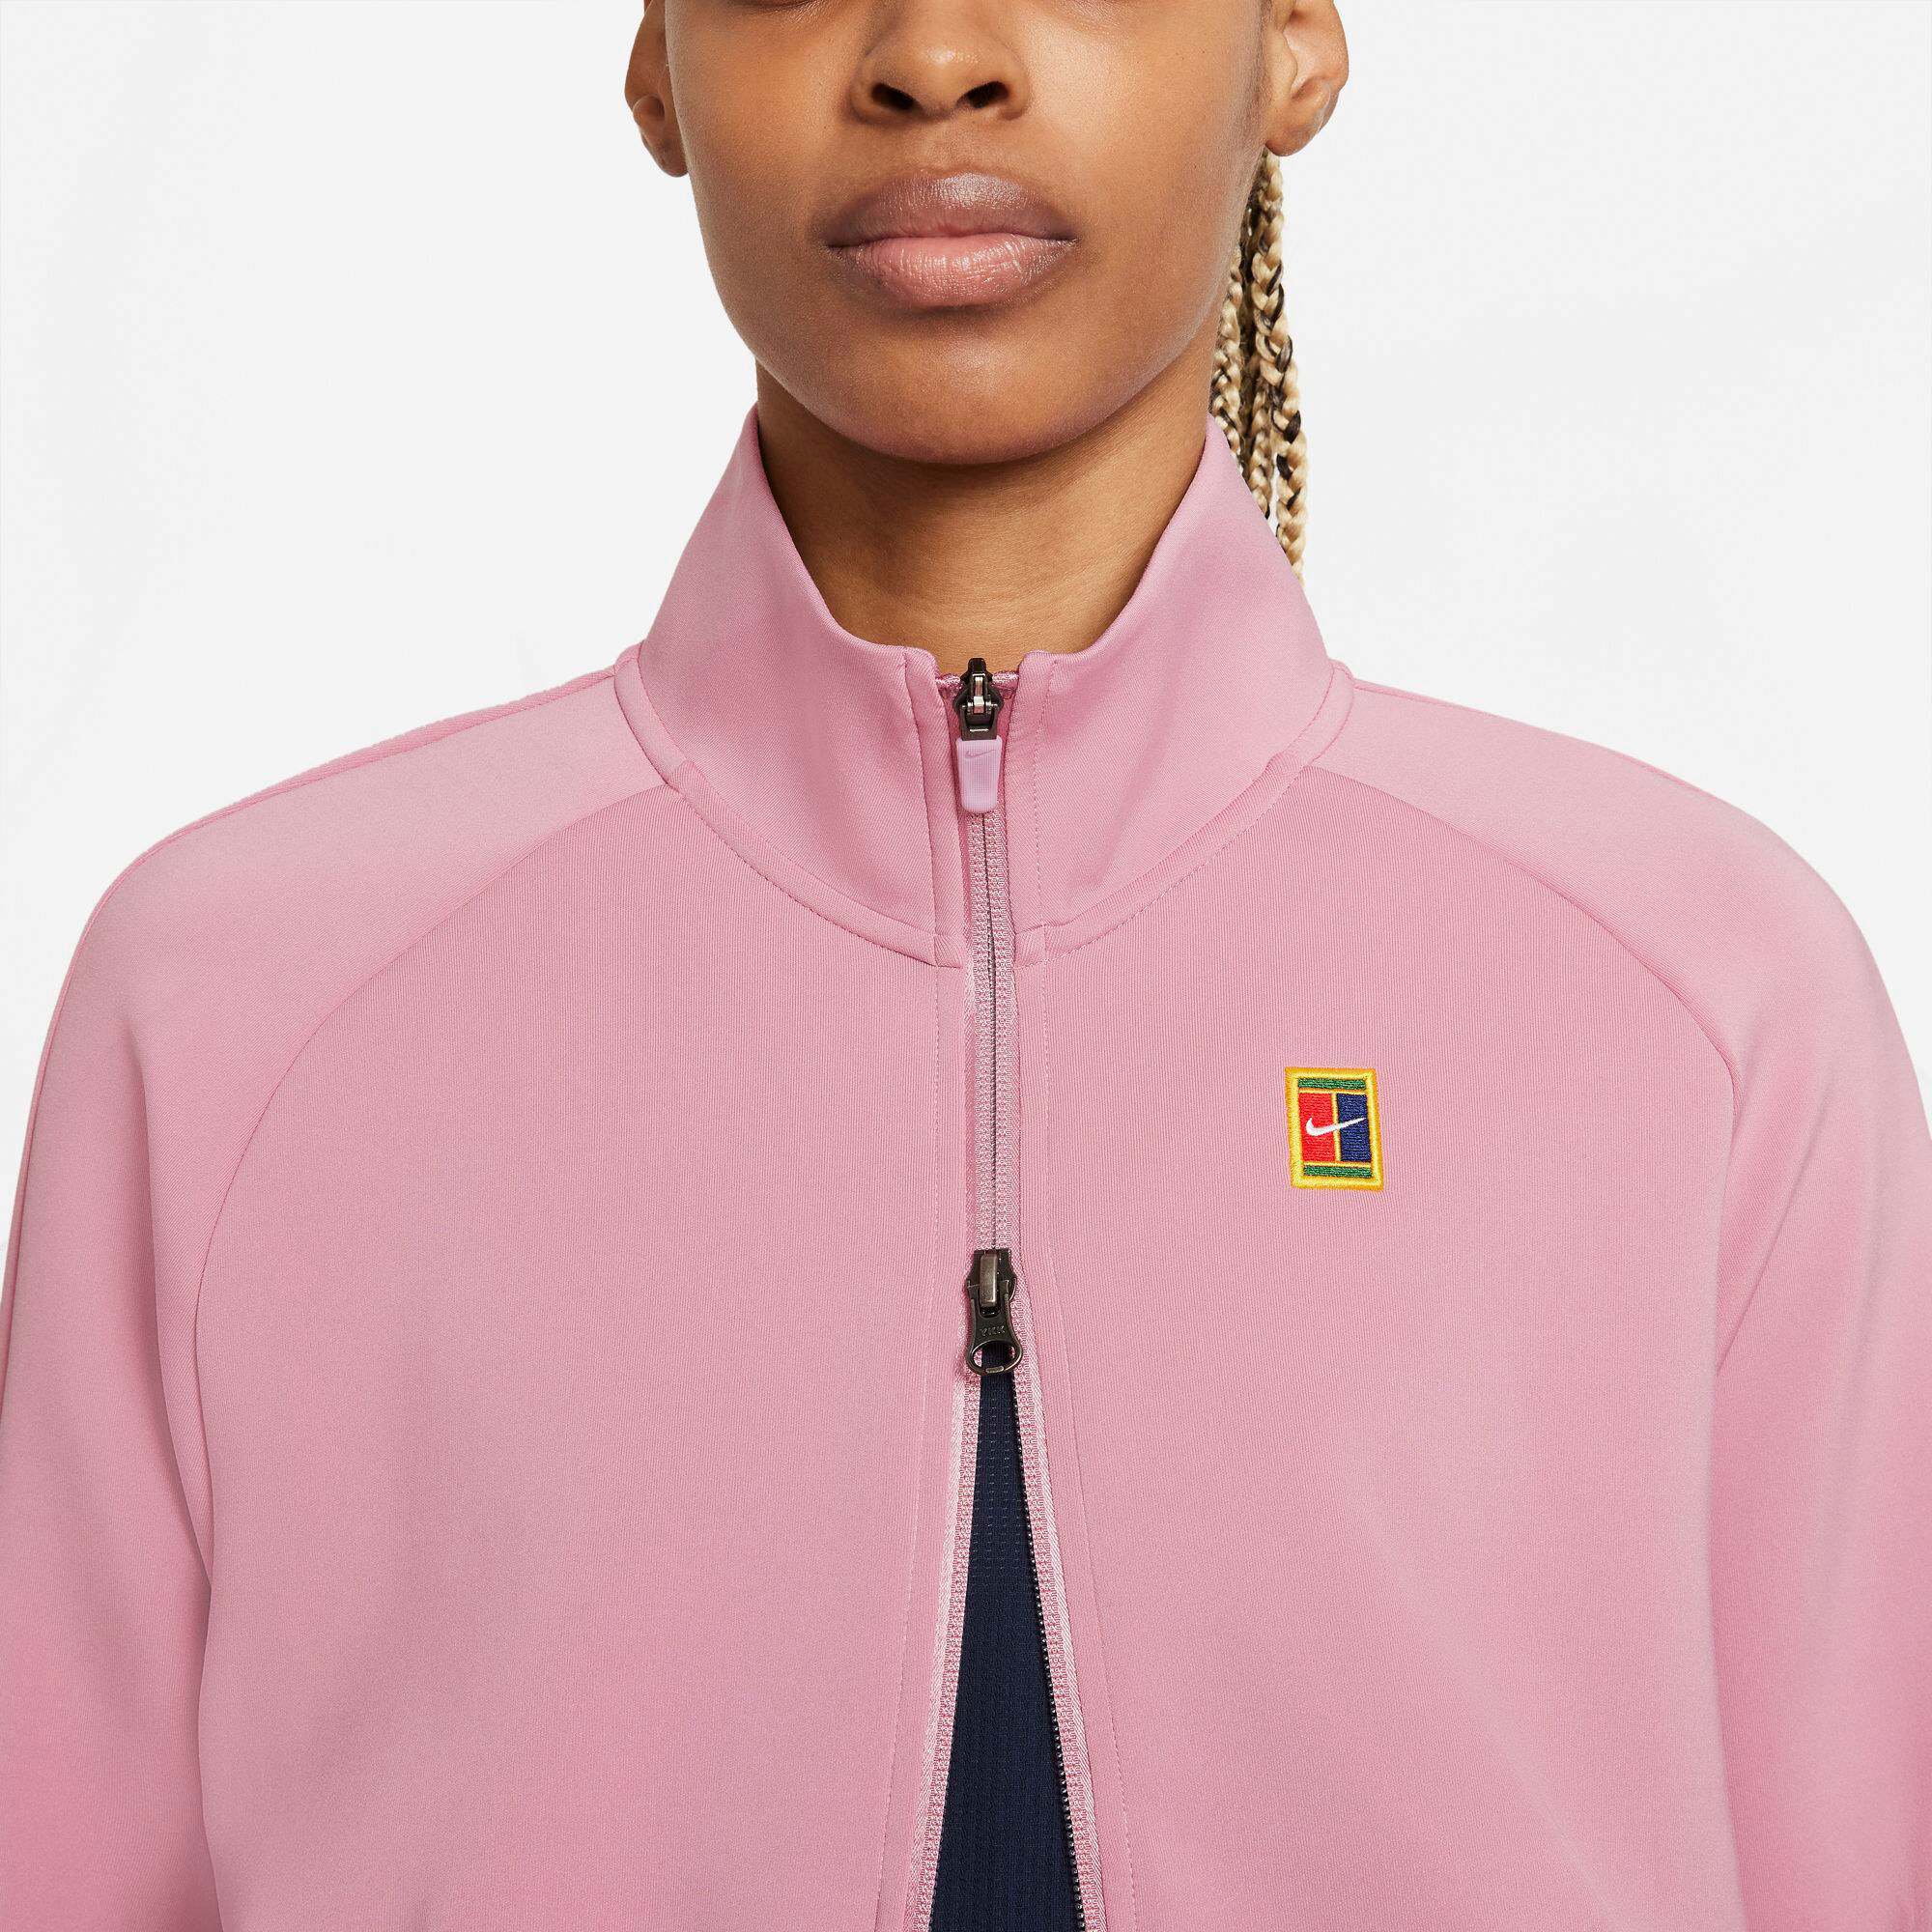 Nike Dri Fit Jacket Women's Size M Full Zip Colorblock Retro Retractable  Hoodie | eBay